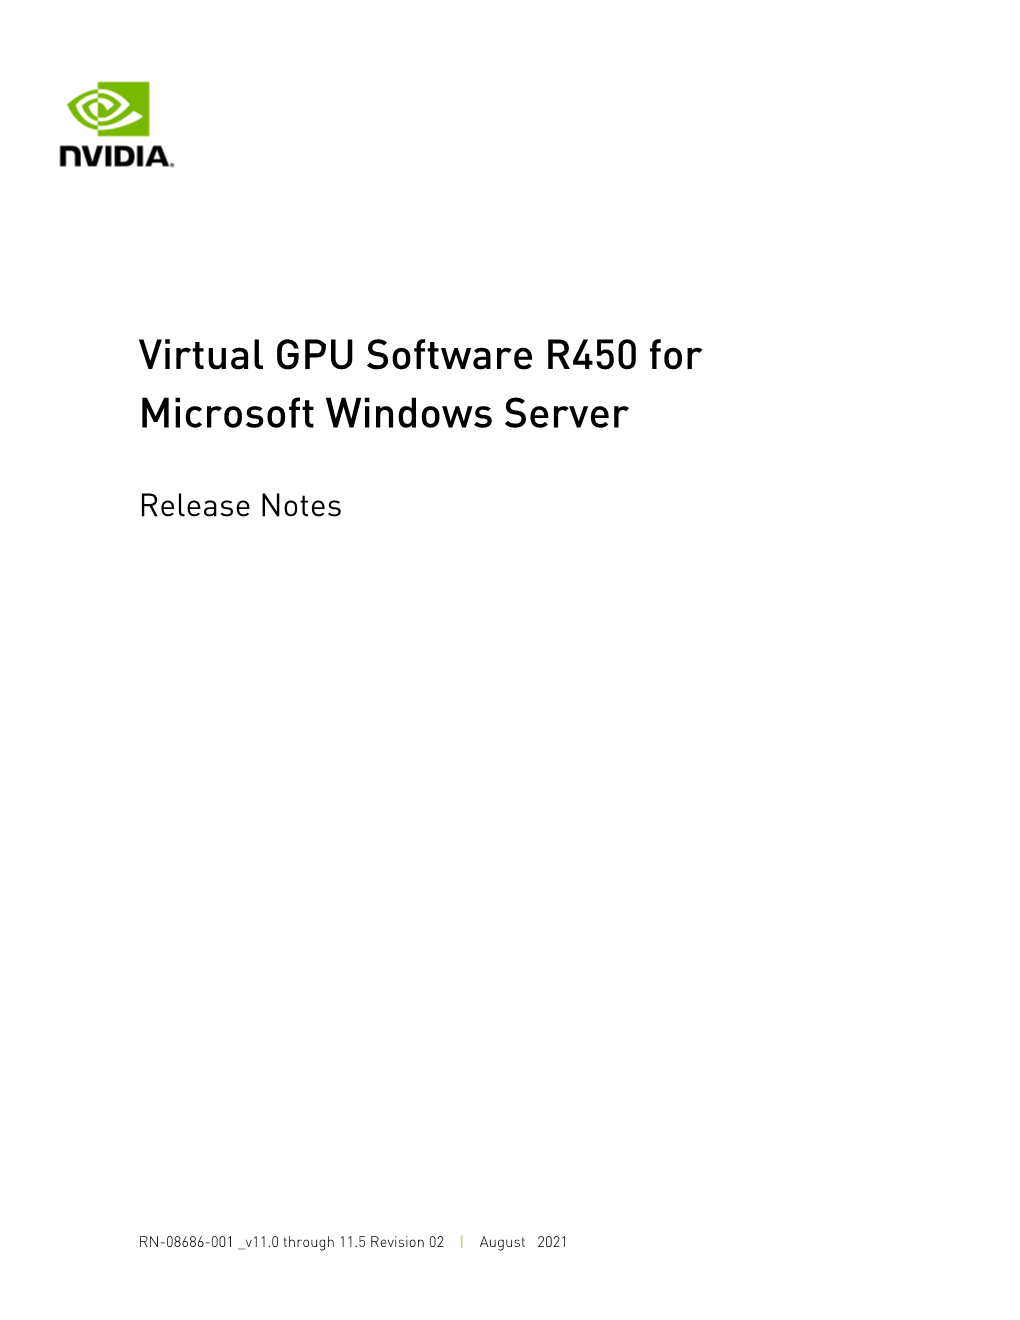 Virtual GPU Software R450 for Microsoft Windows Server